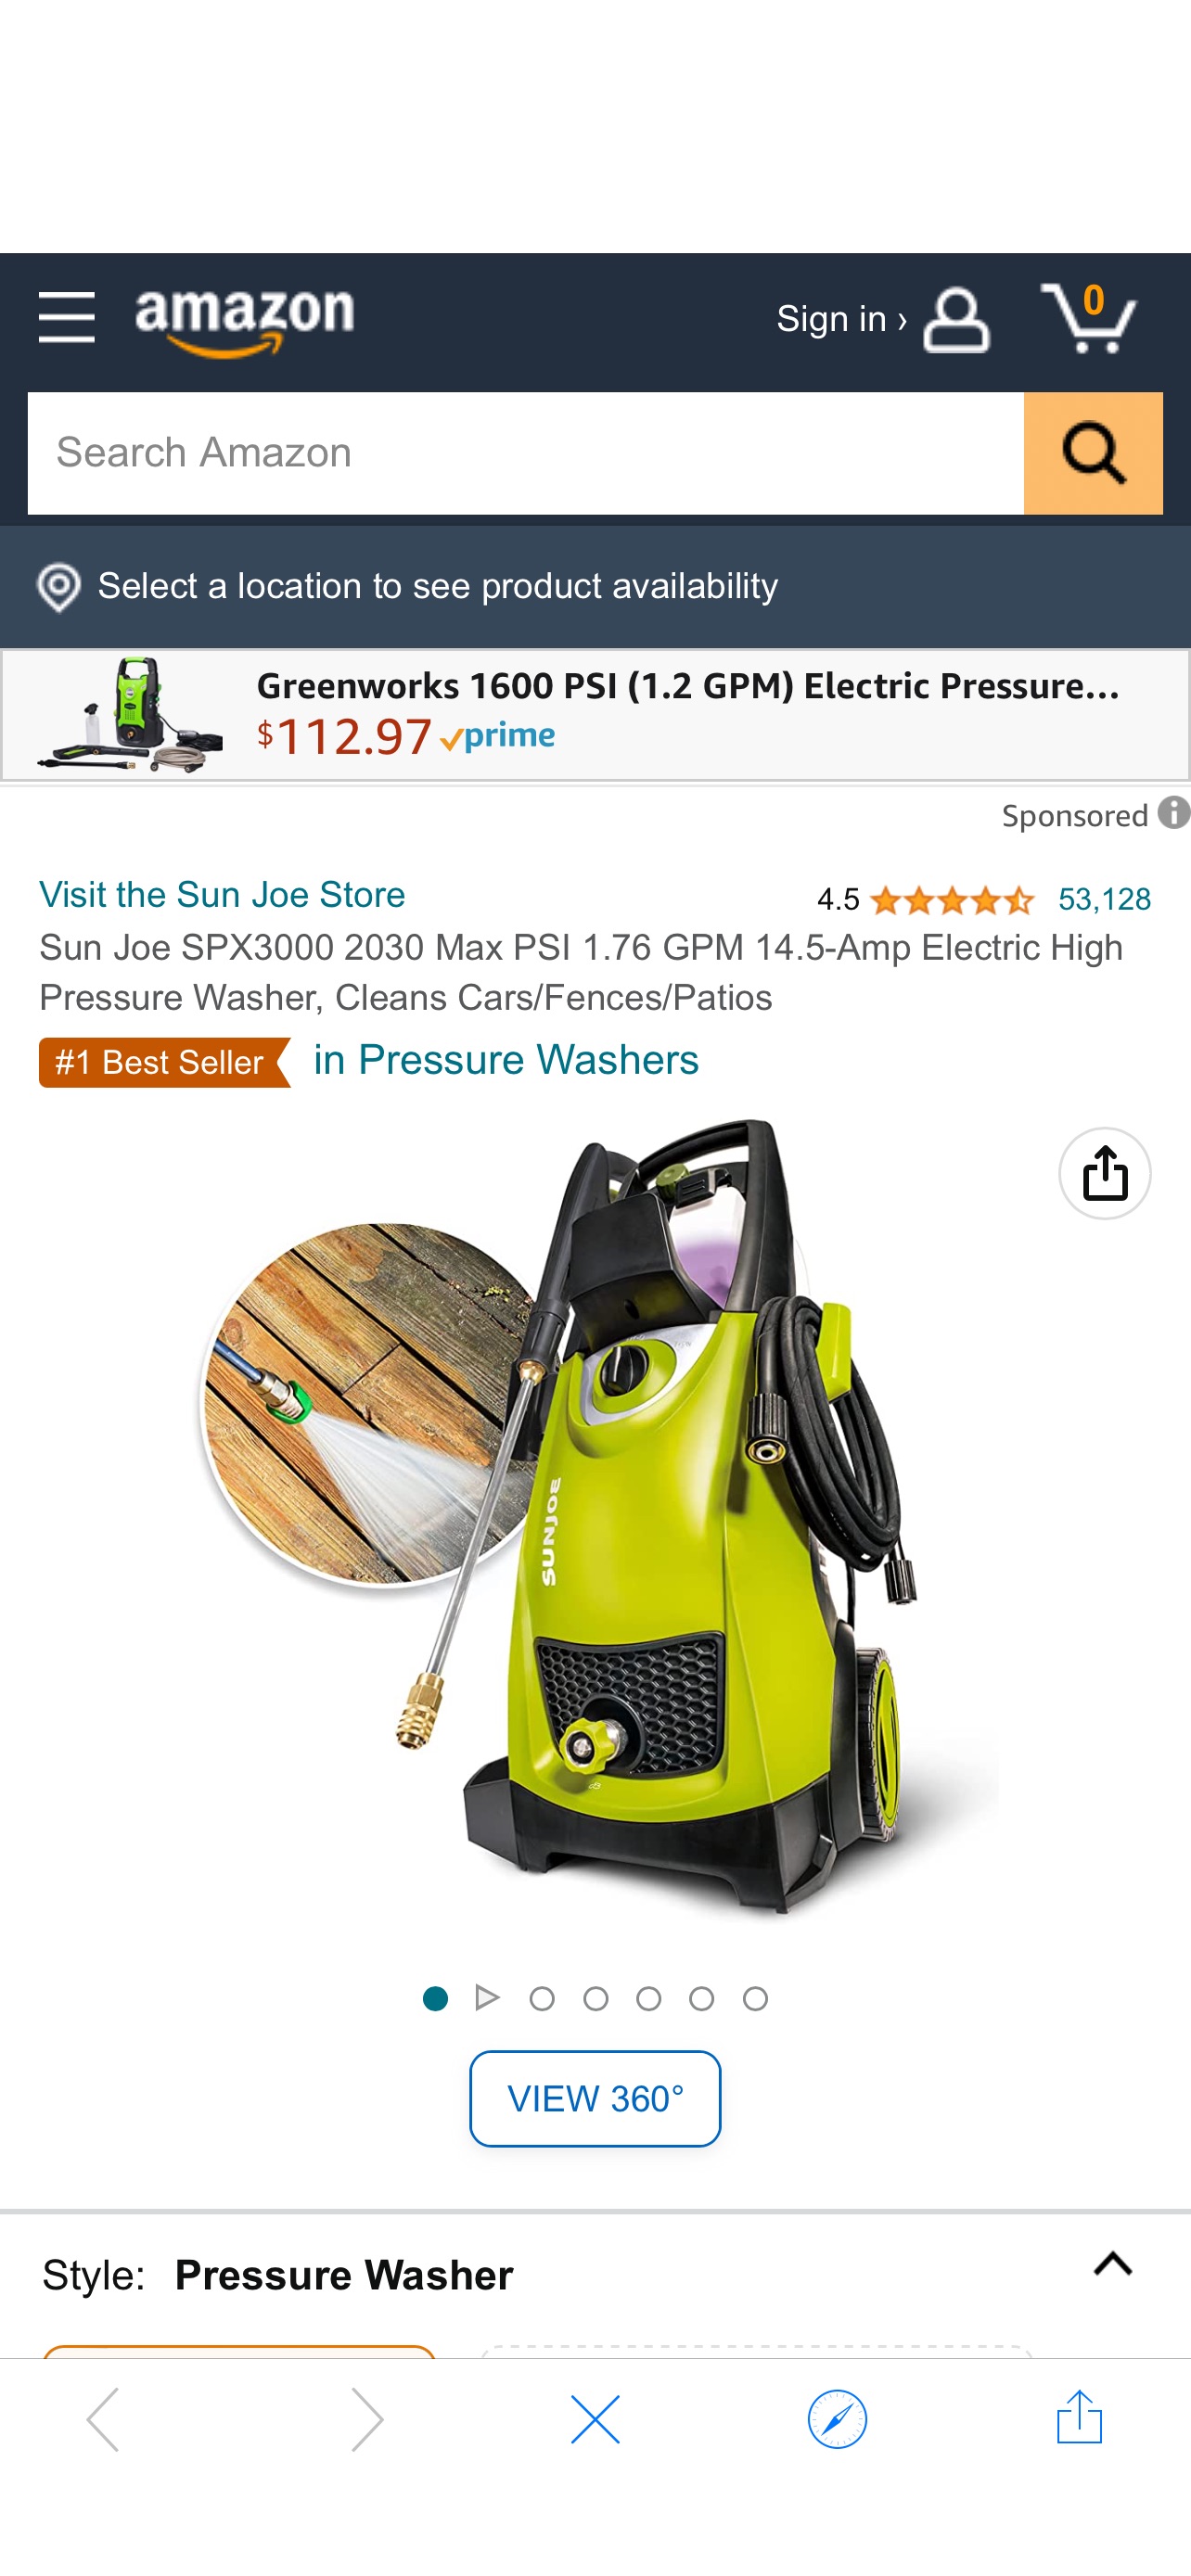 Amazon.com : Sun Joe SPX3000 2030 Max PSI 1.76 GPM 14.5-Amp Electric High Pressure Washer, Cleans Cars/Fences/Patios : Patio, Lawn & Garden